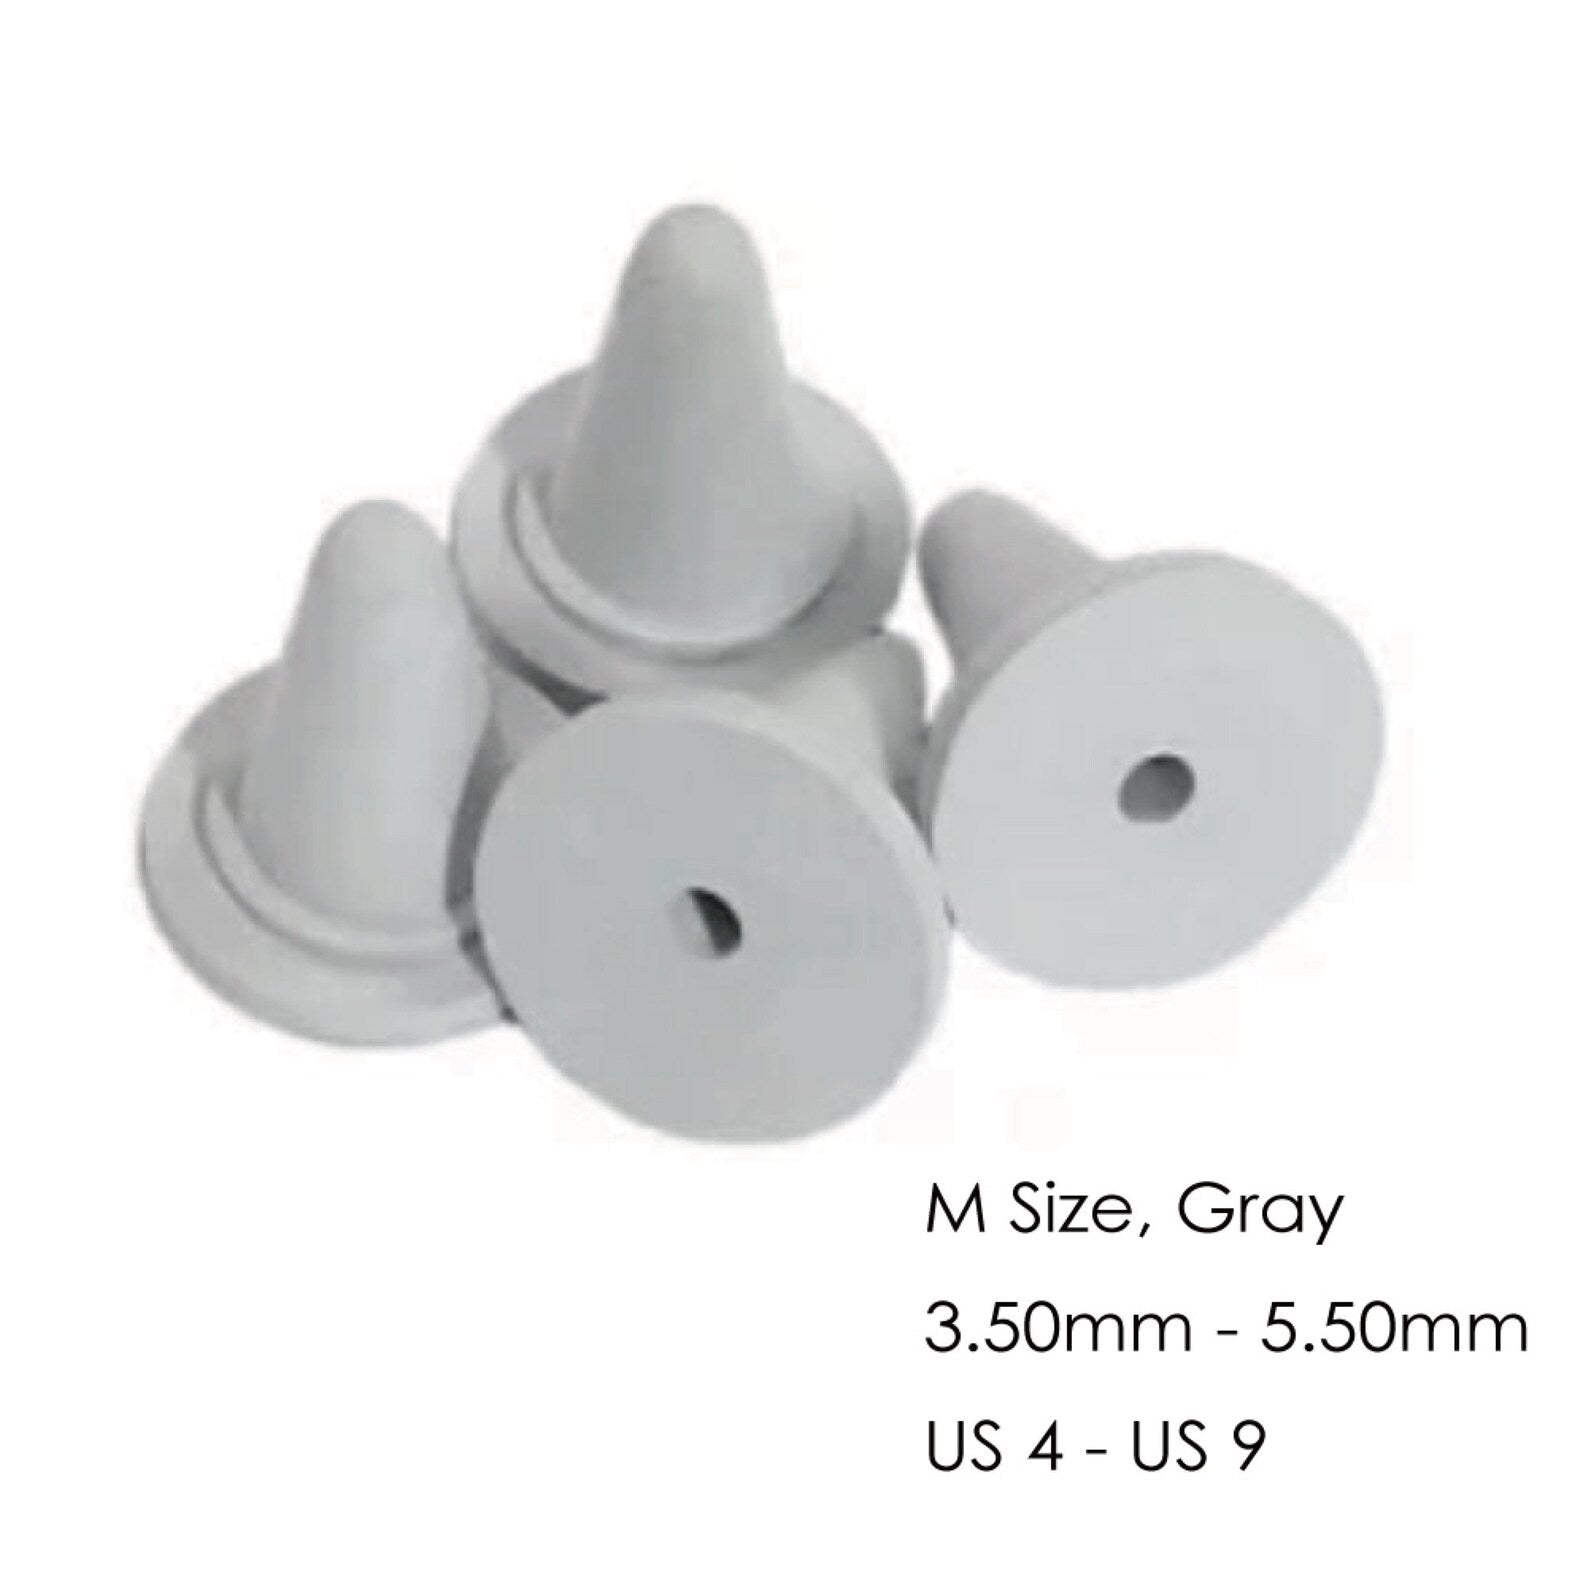 rubber point protectors - grey (3.5 - 5.5mm) at Wabi Sabi